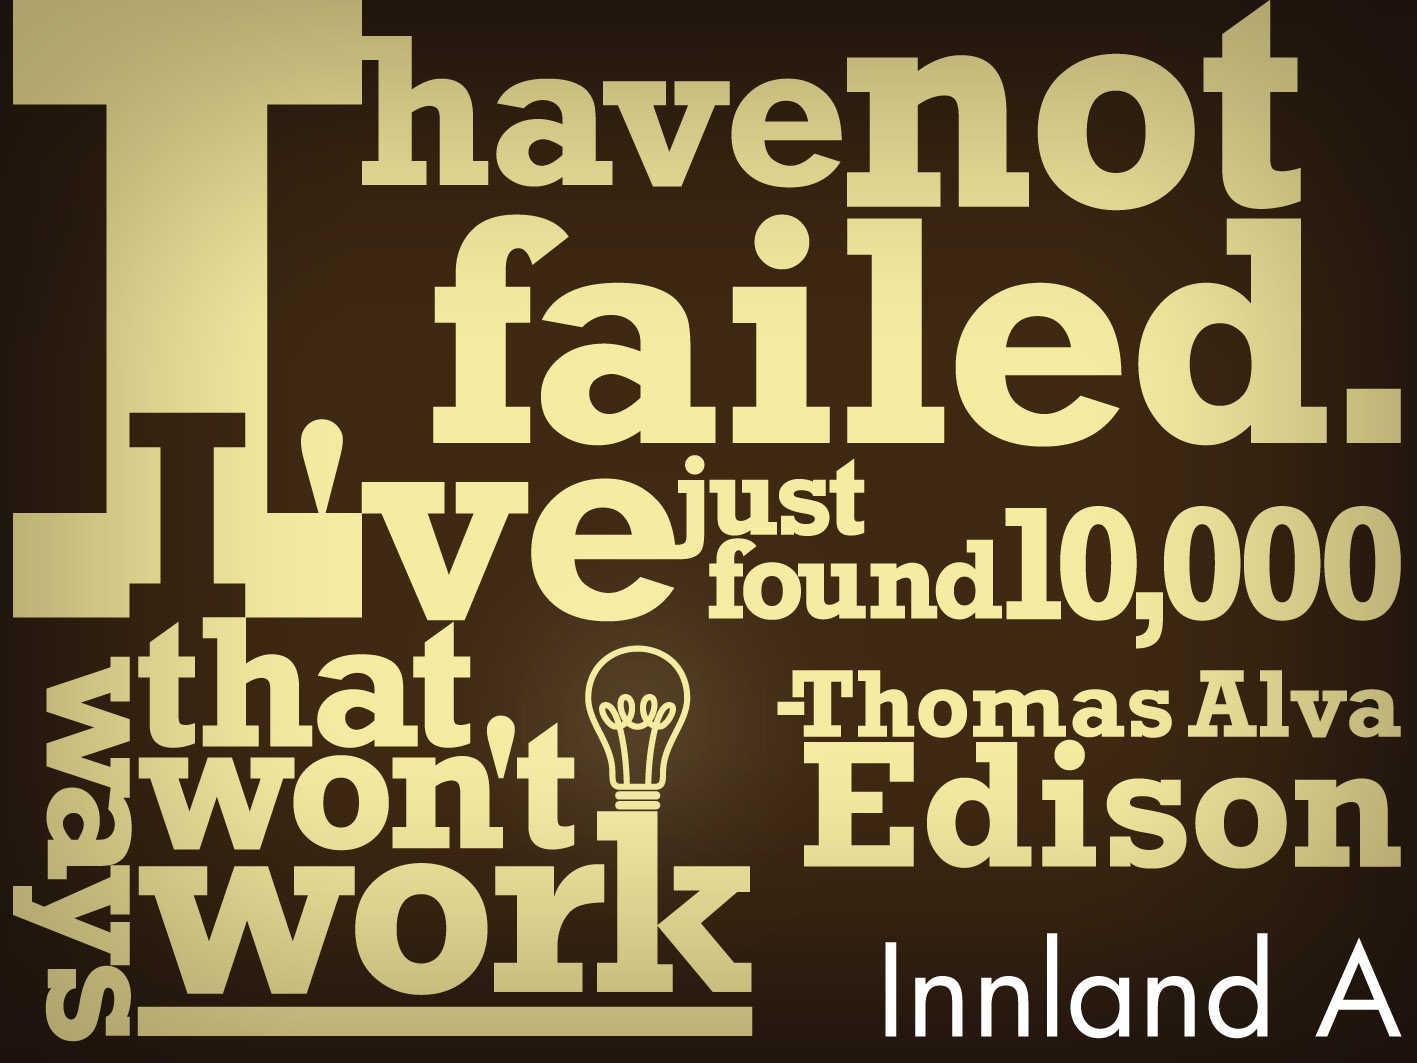 Thomas A. Edison's quote #5